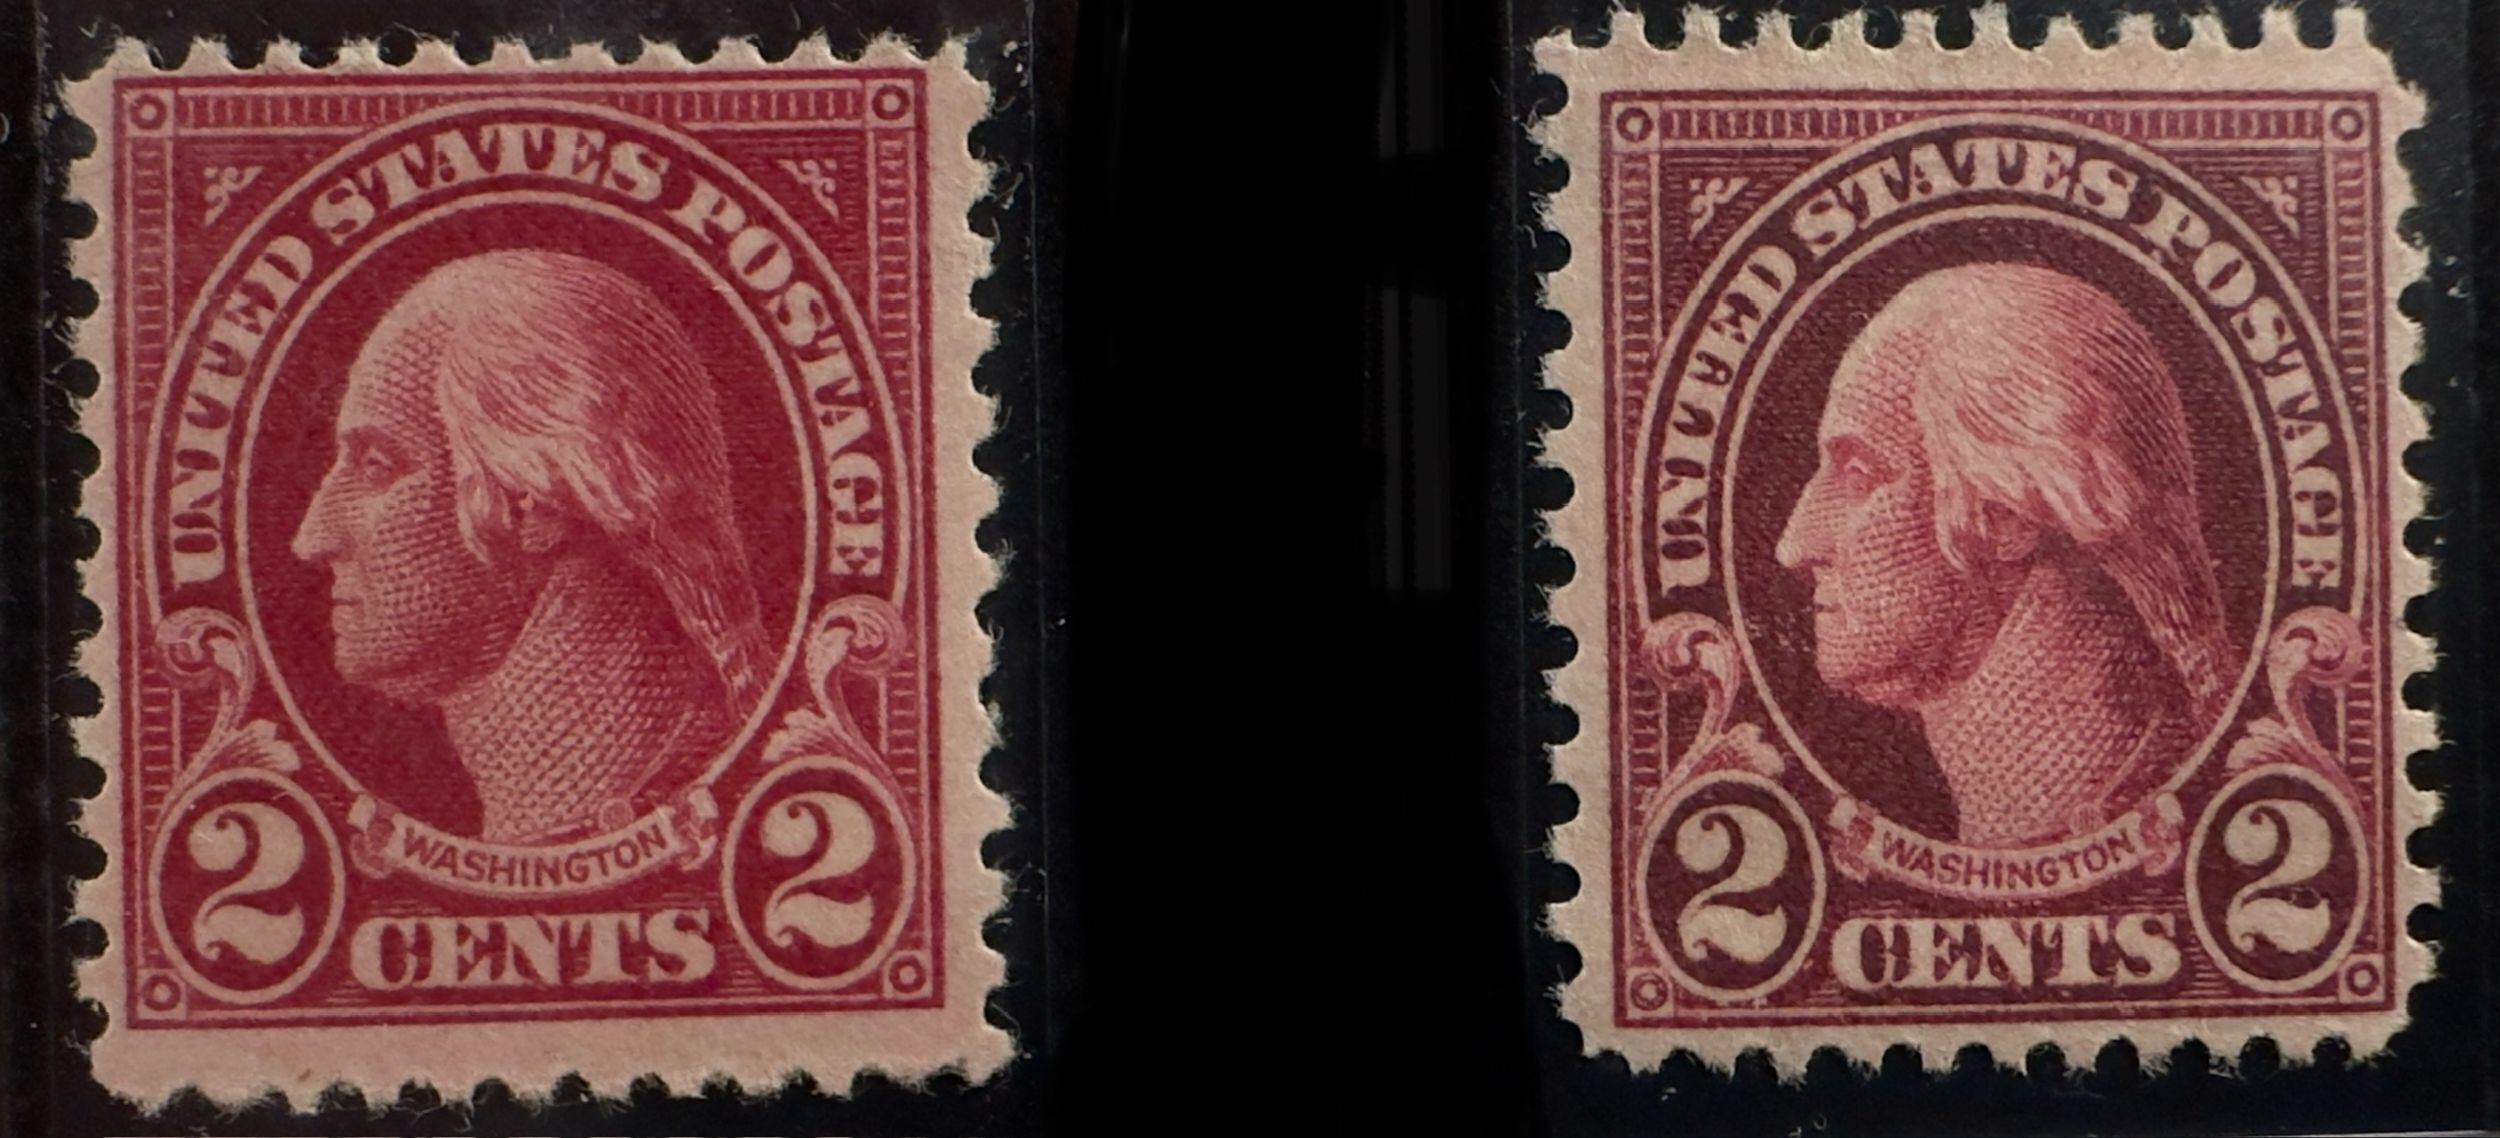 Scott Identification Guide of Us Regular Issue Stamps 1847-1934